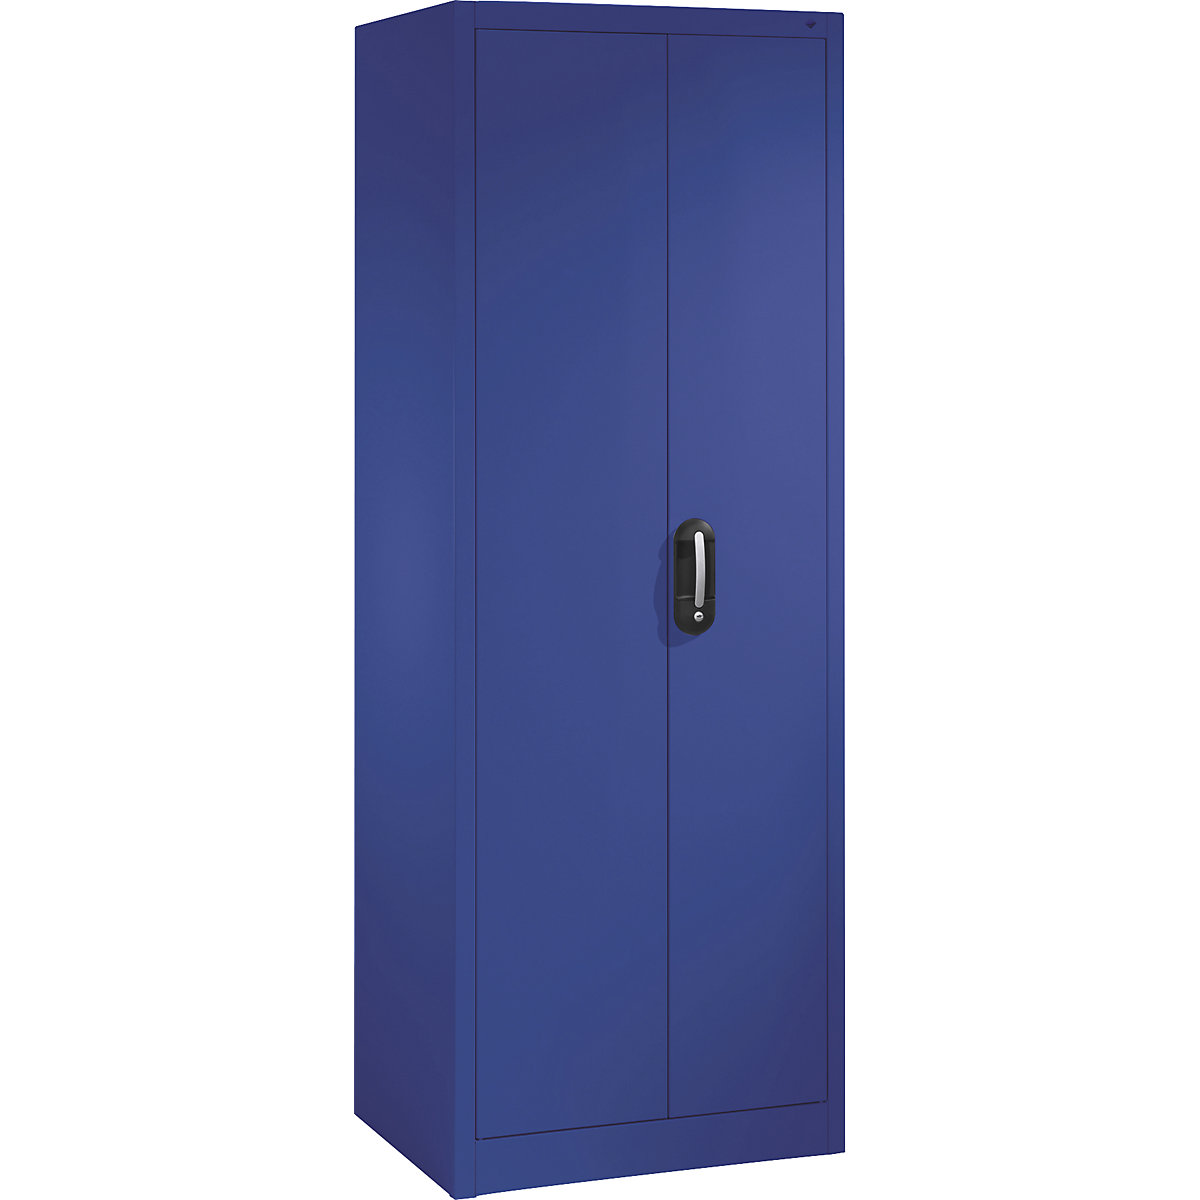 C+P – ACURADO universal cupboard, WxD 700 x 500 mm, lapis blue / lapis blue